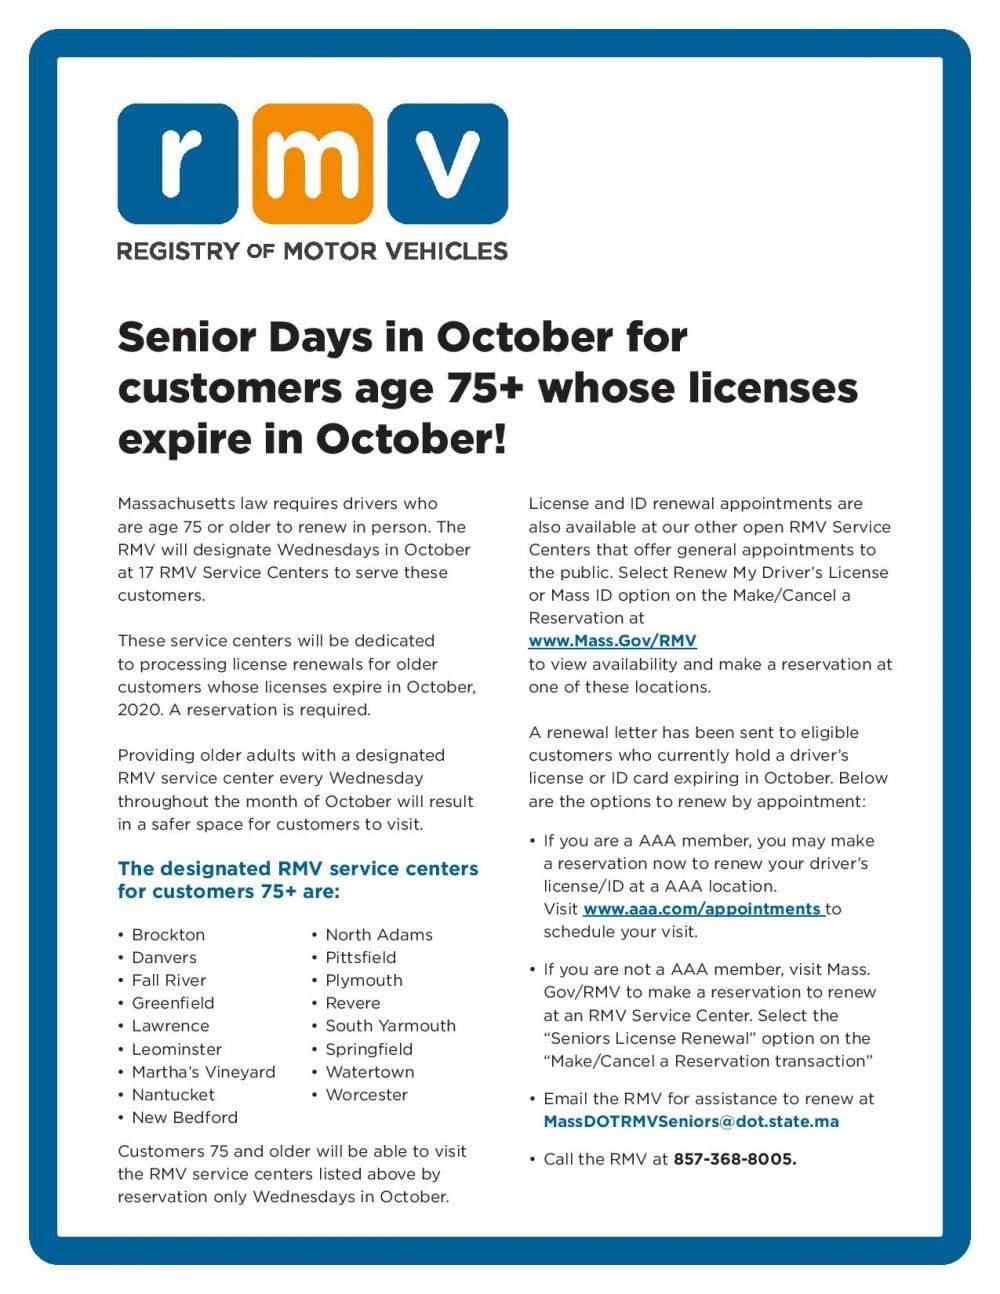 RMV Flyer for Senior Days in October